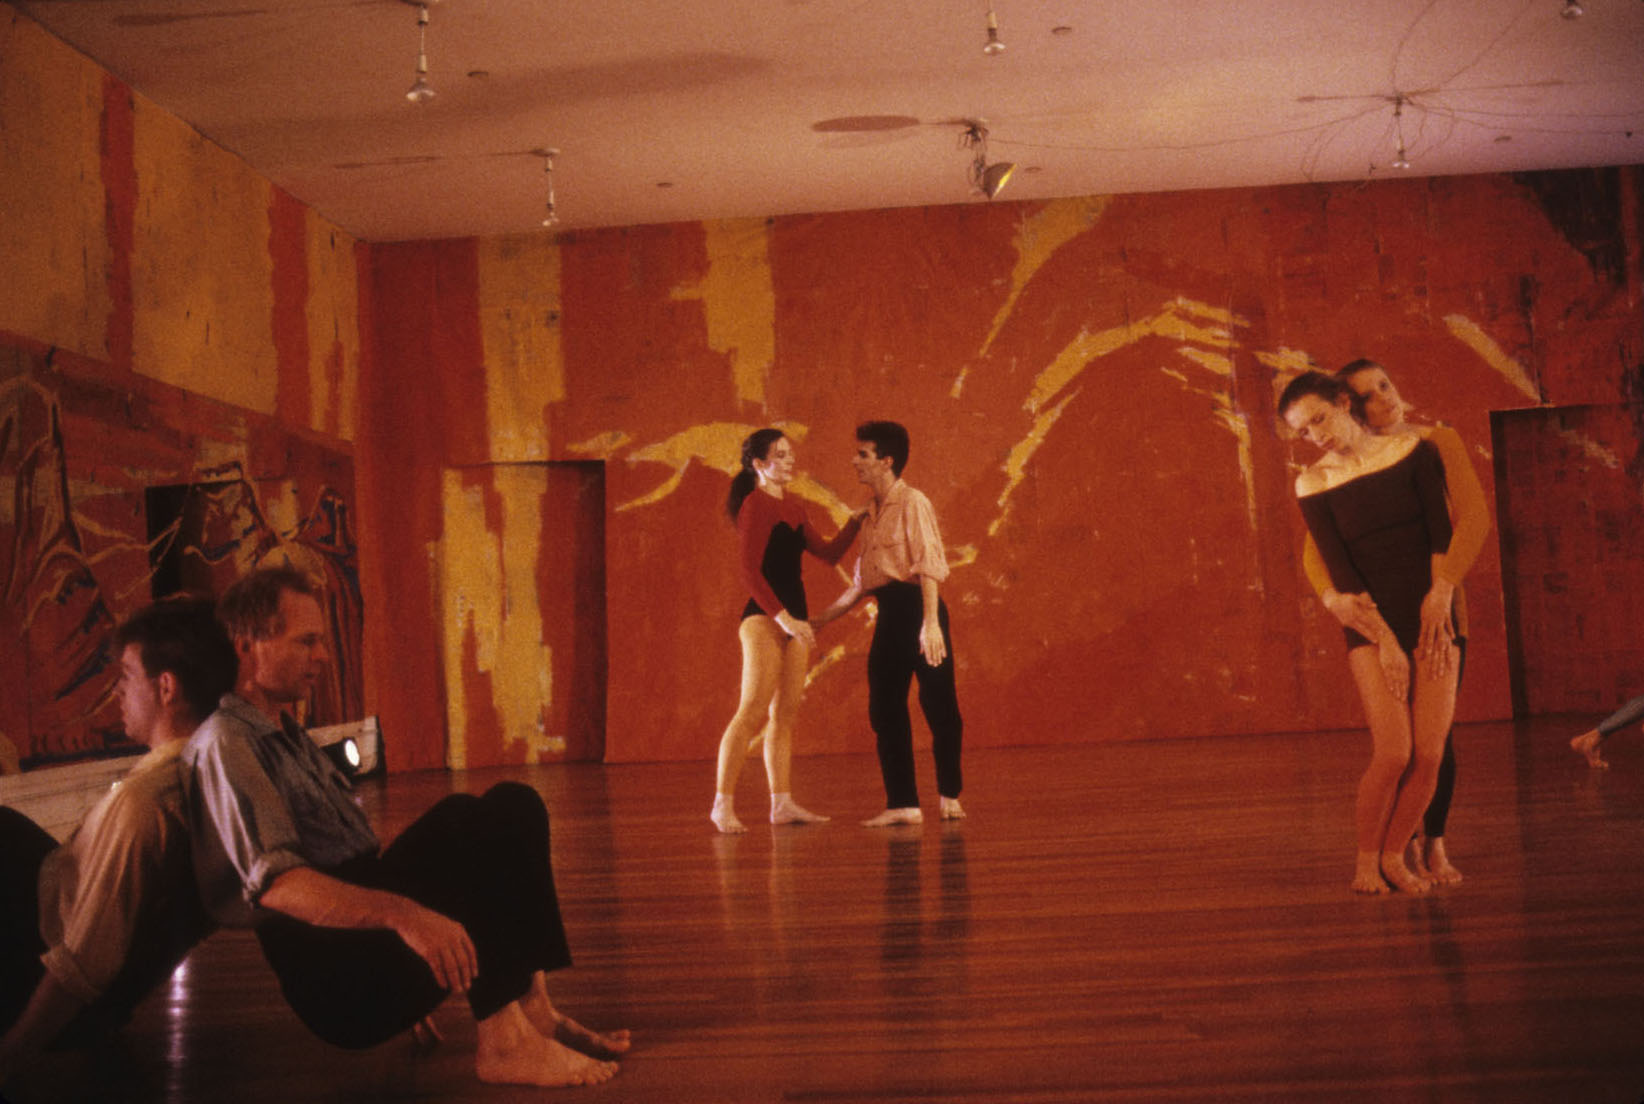 Douglas Dunn Studio (1989)